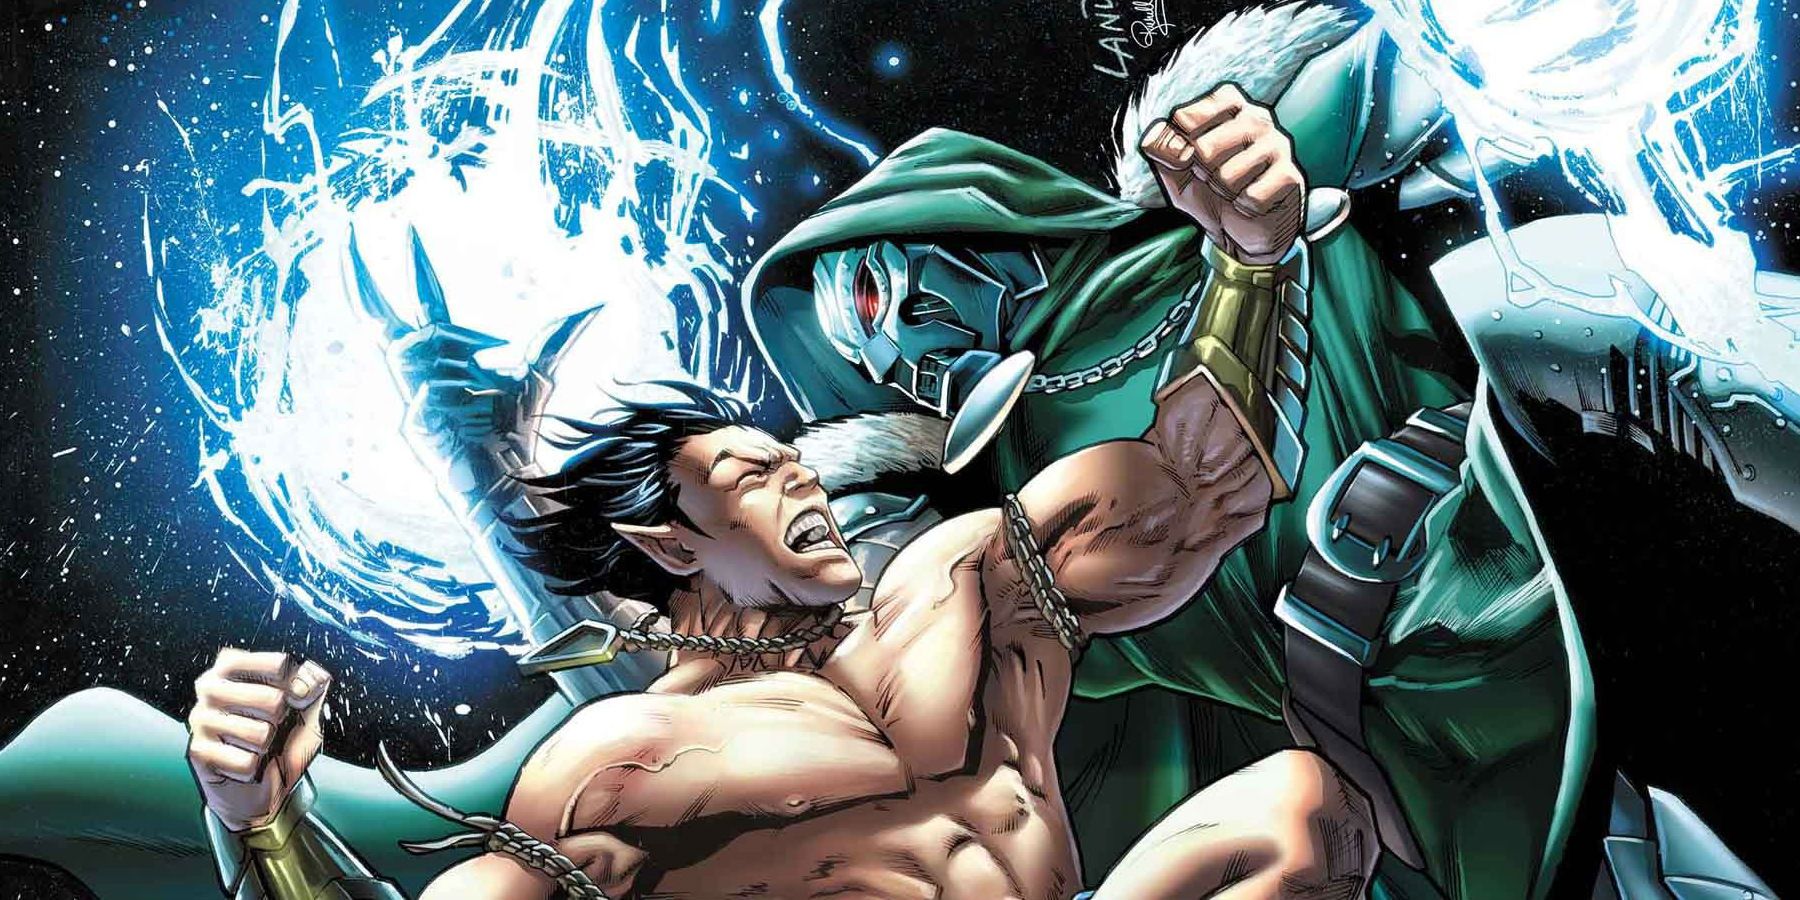 Namor fights Doctor Doom in Marvel comics